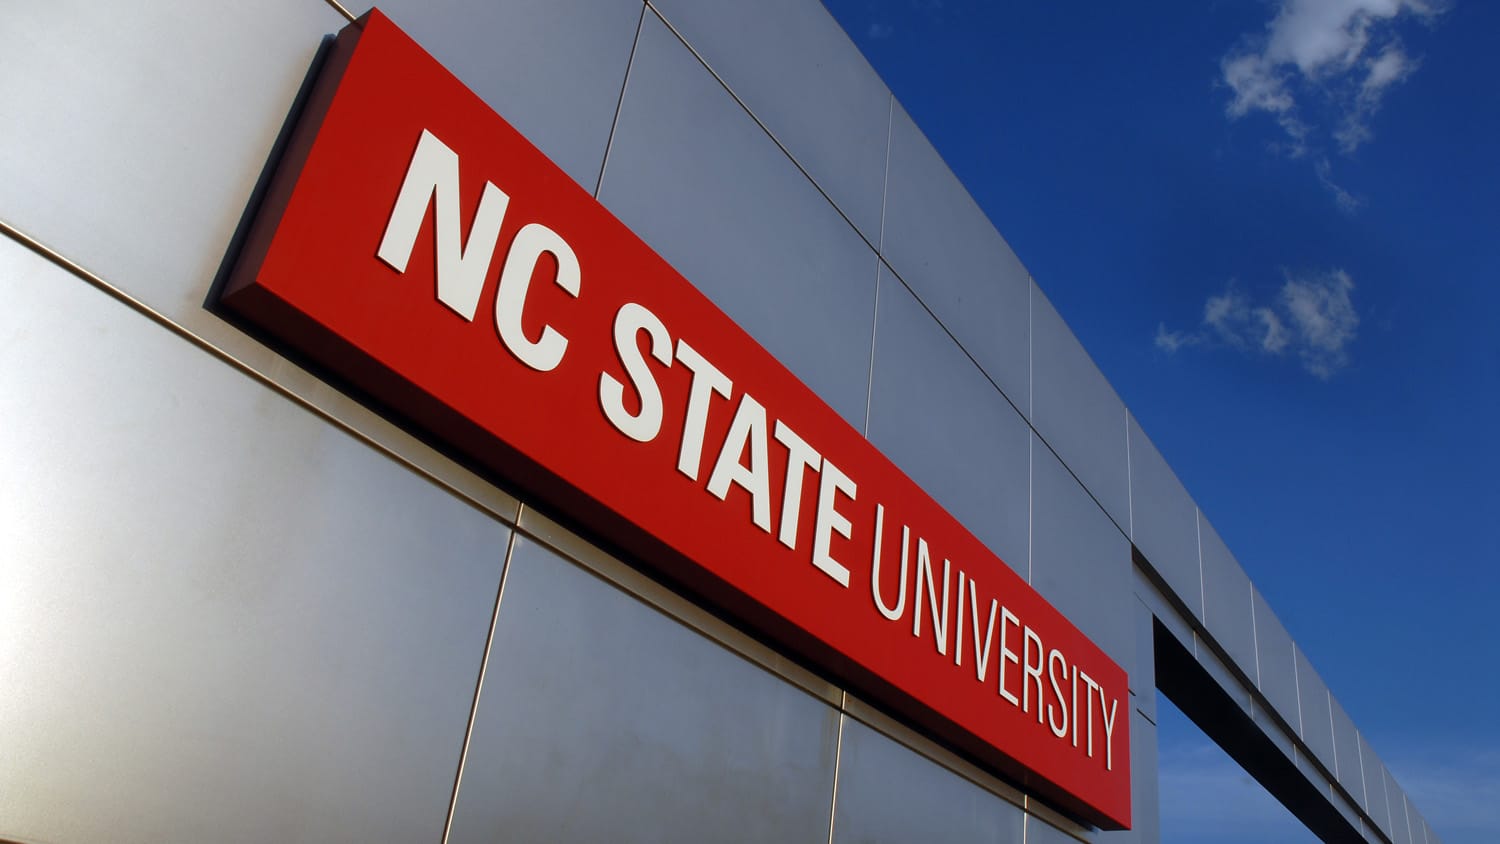 Campus gateway sign reading NC State University